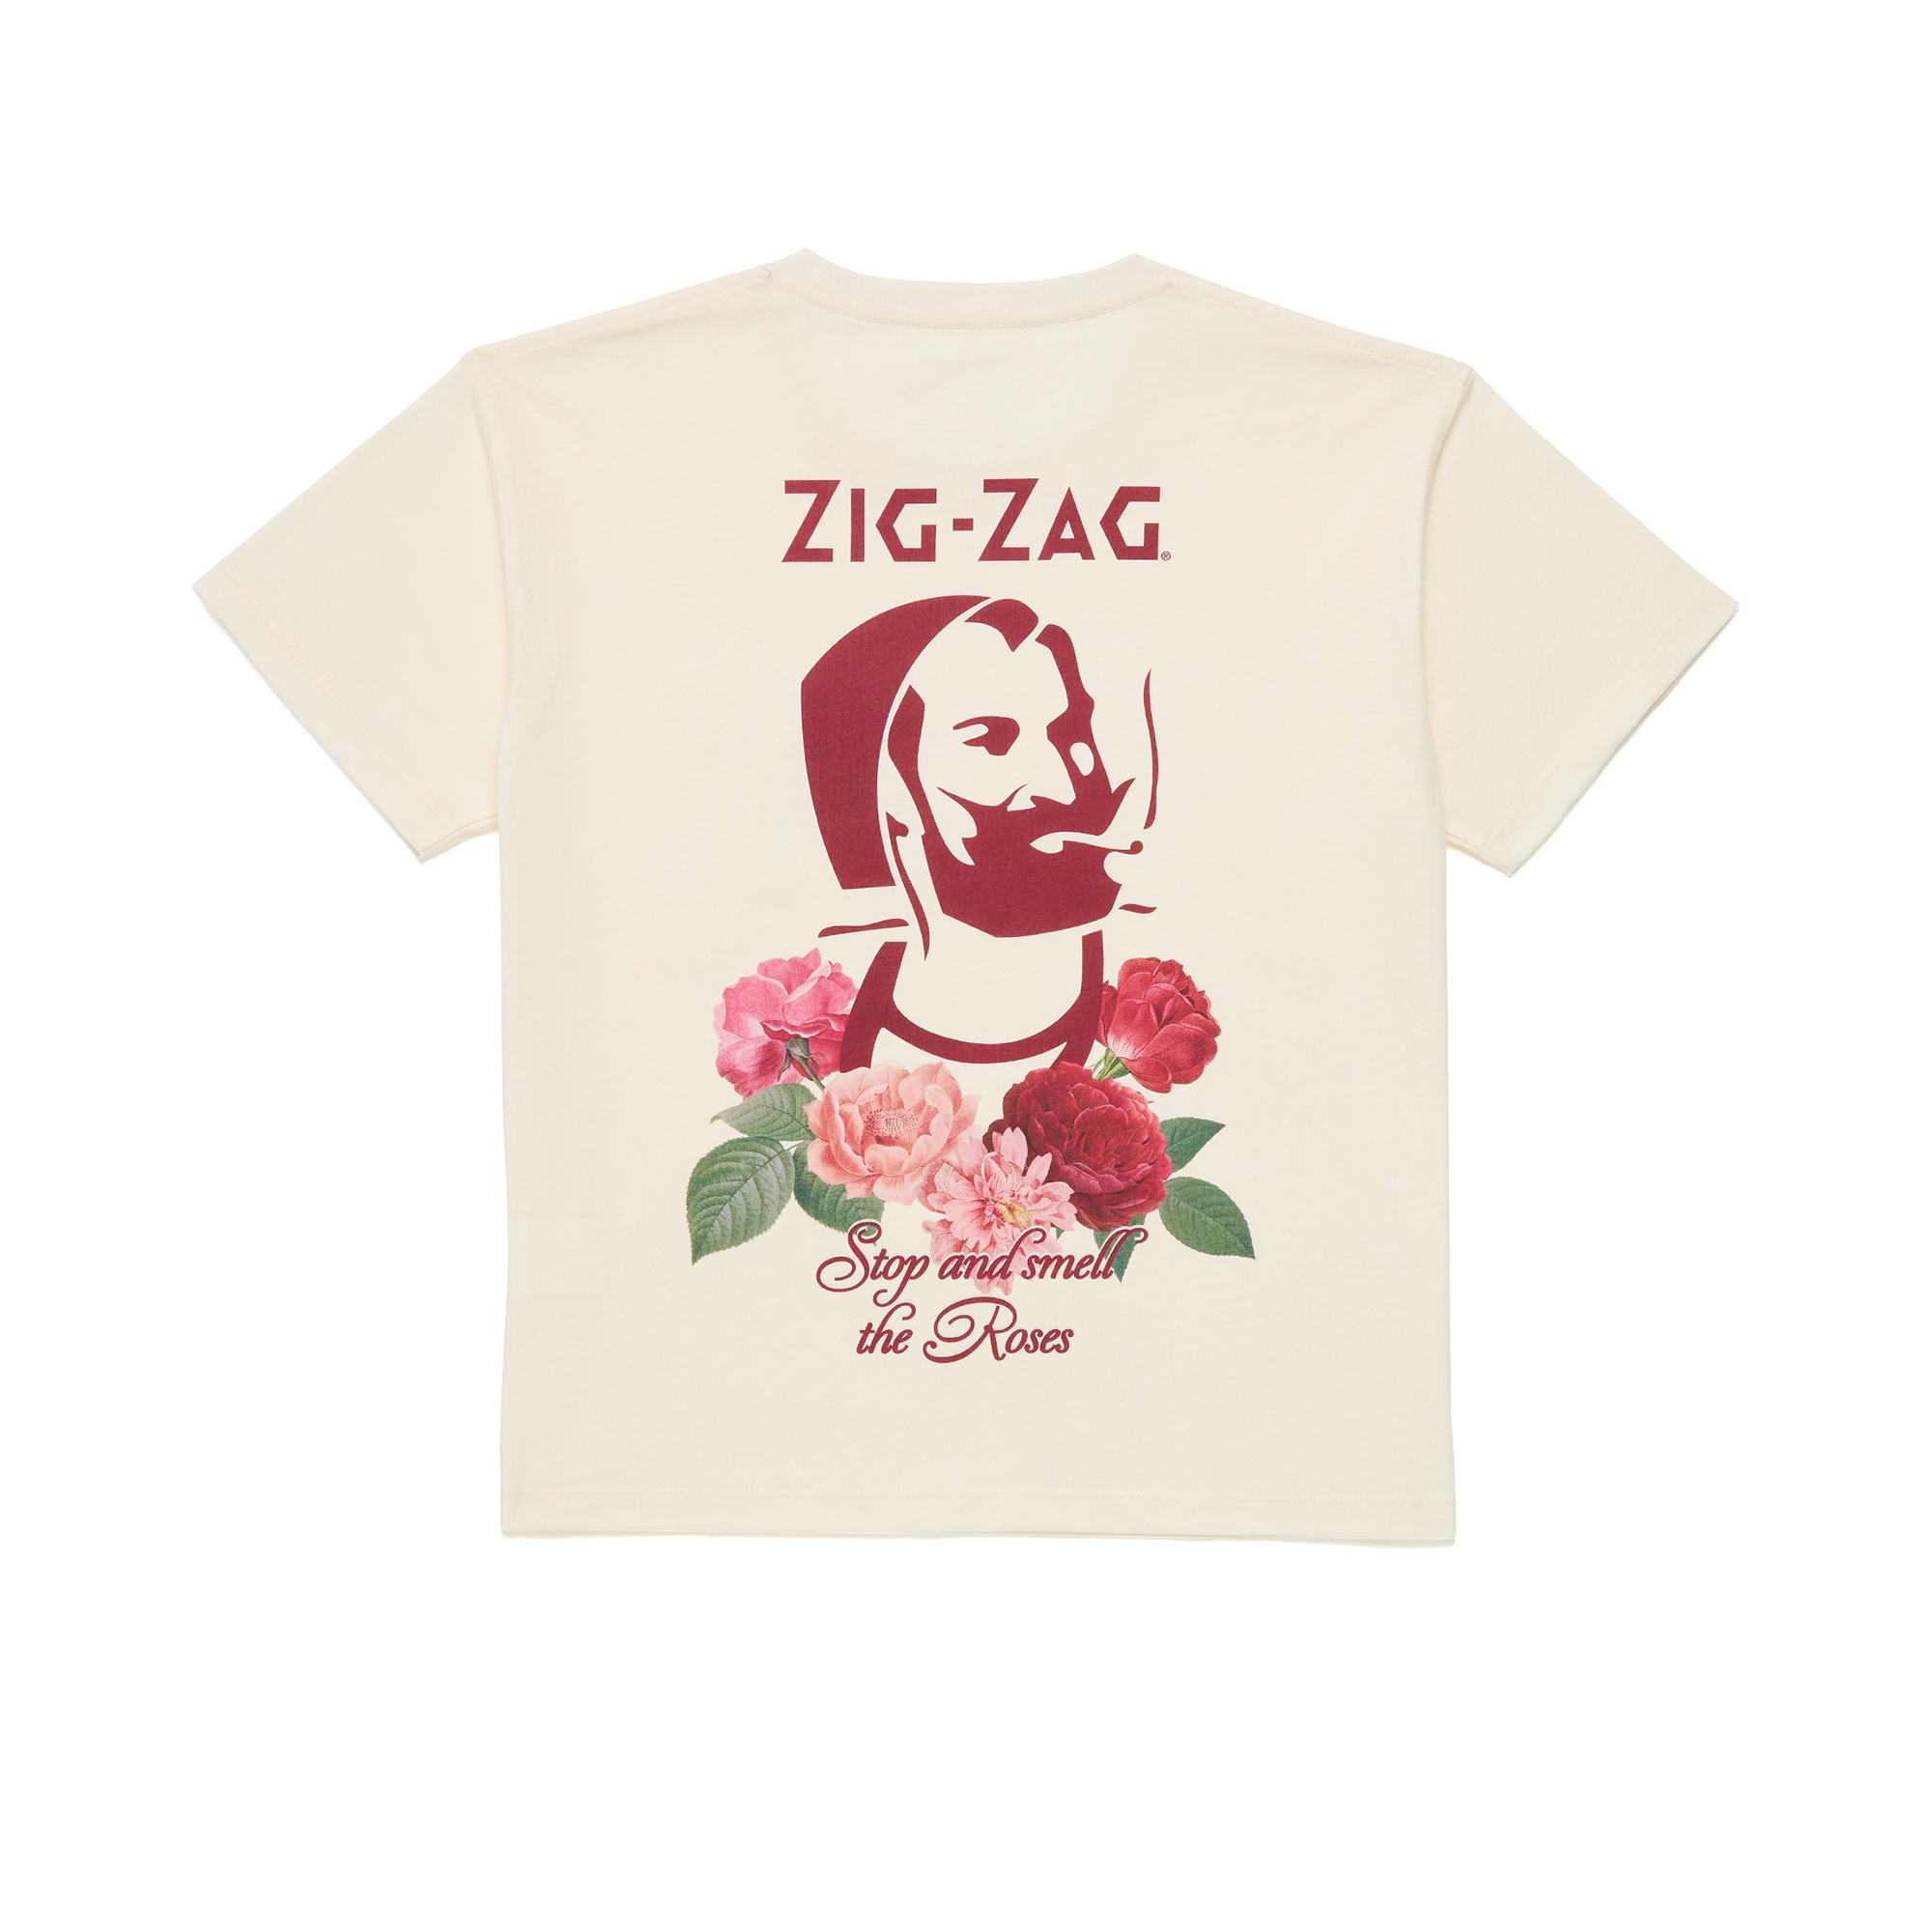 Zig-Zag Smell the Roses Women's Pocket T-shirt